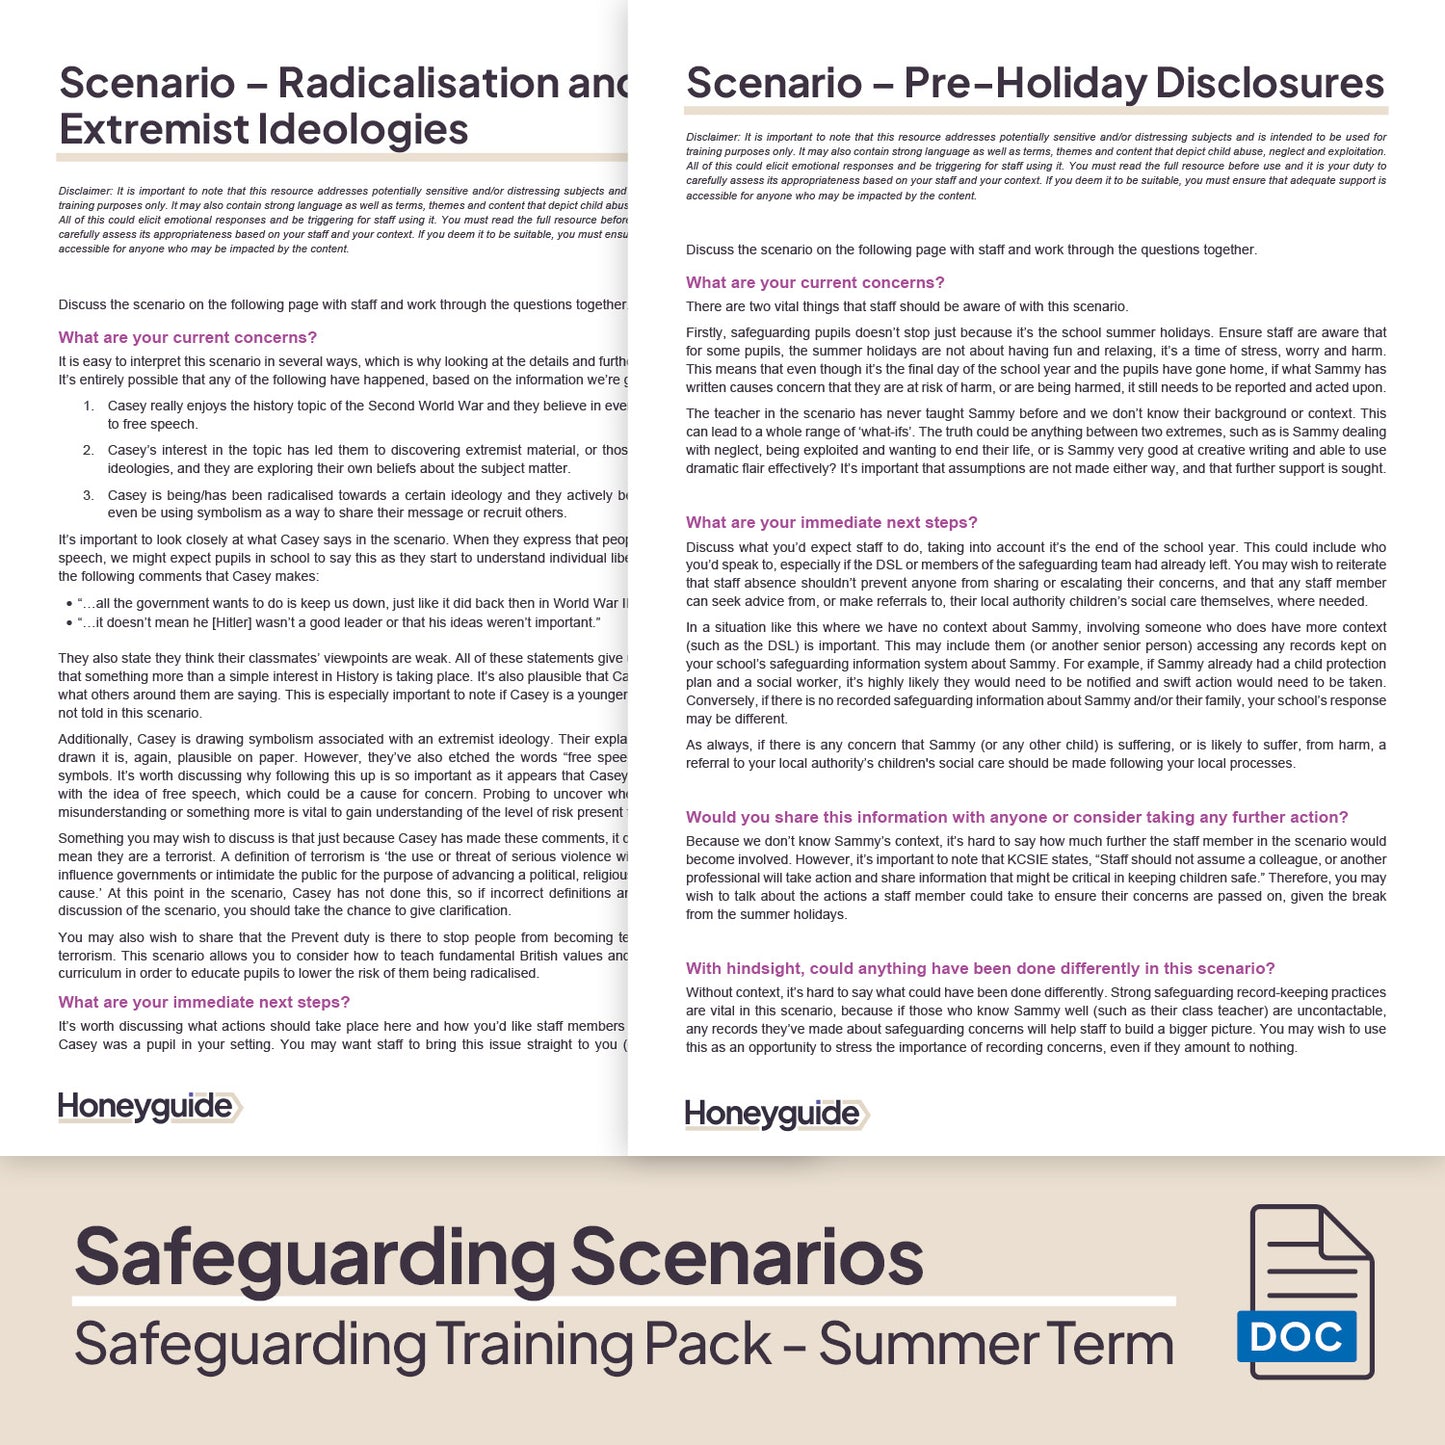 Safeguarding Training Pack - Summer Term